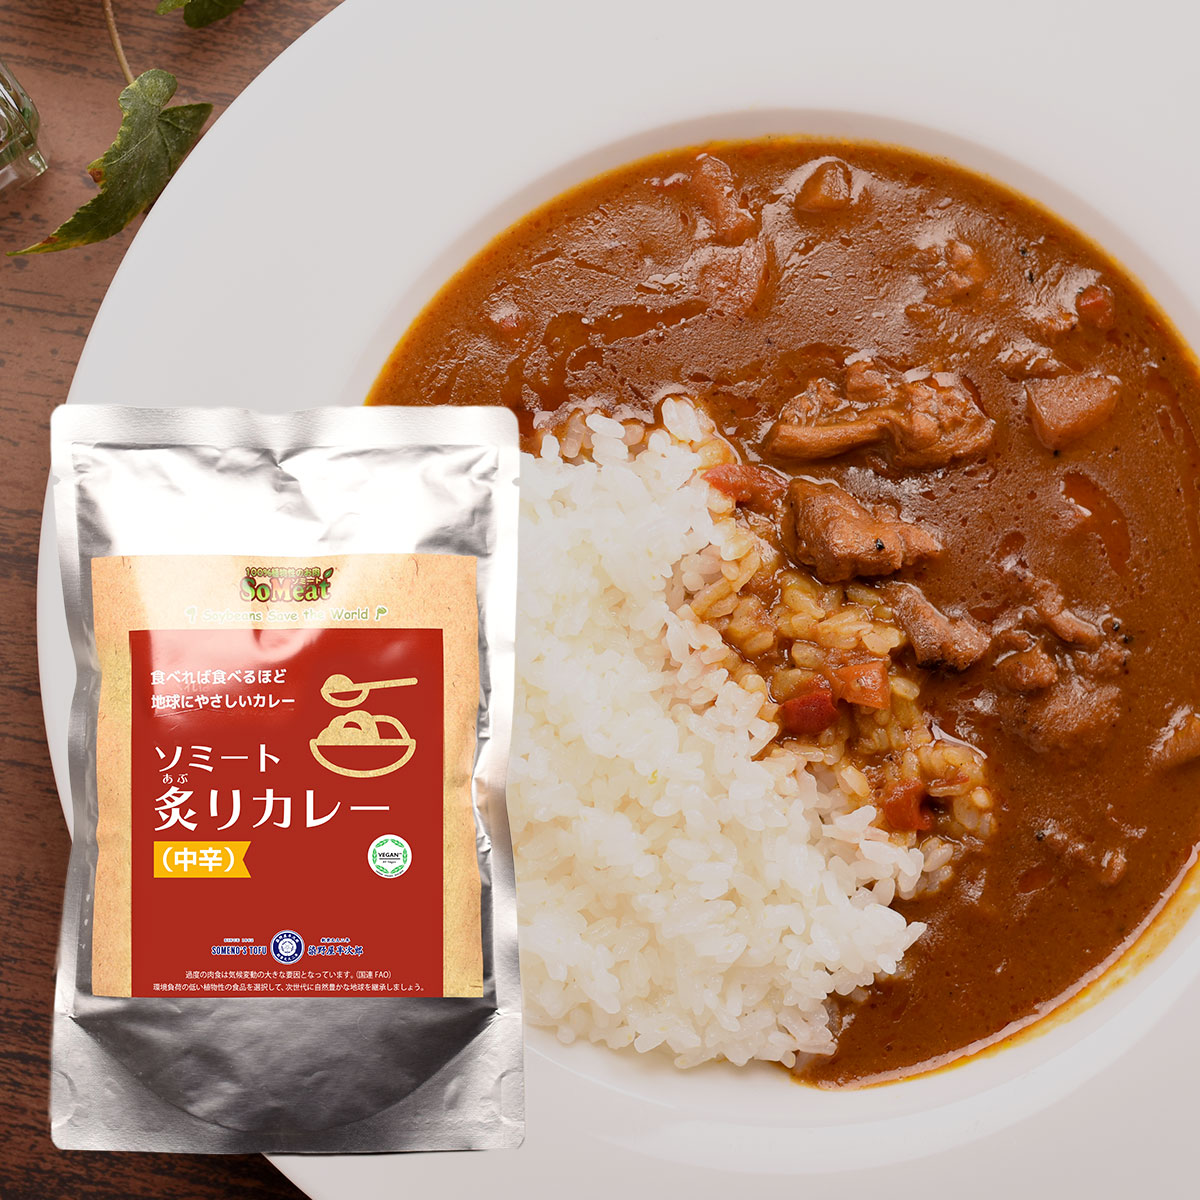 Aburiyaki (Grilled) Curry